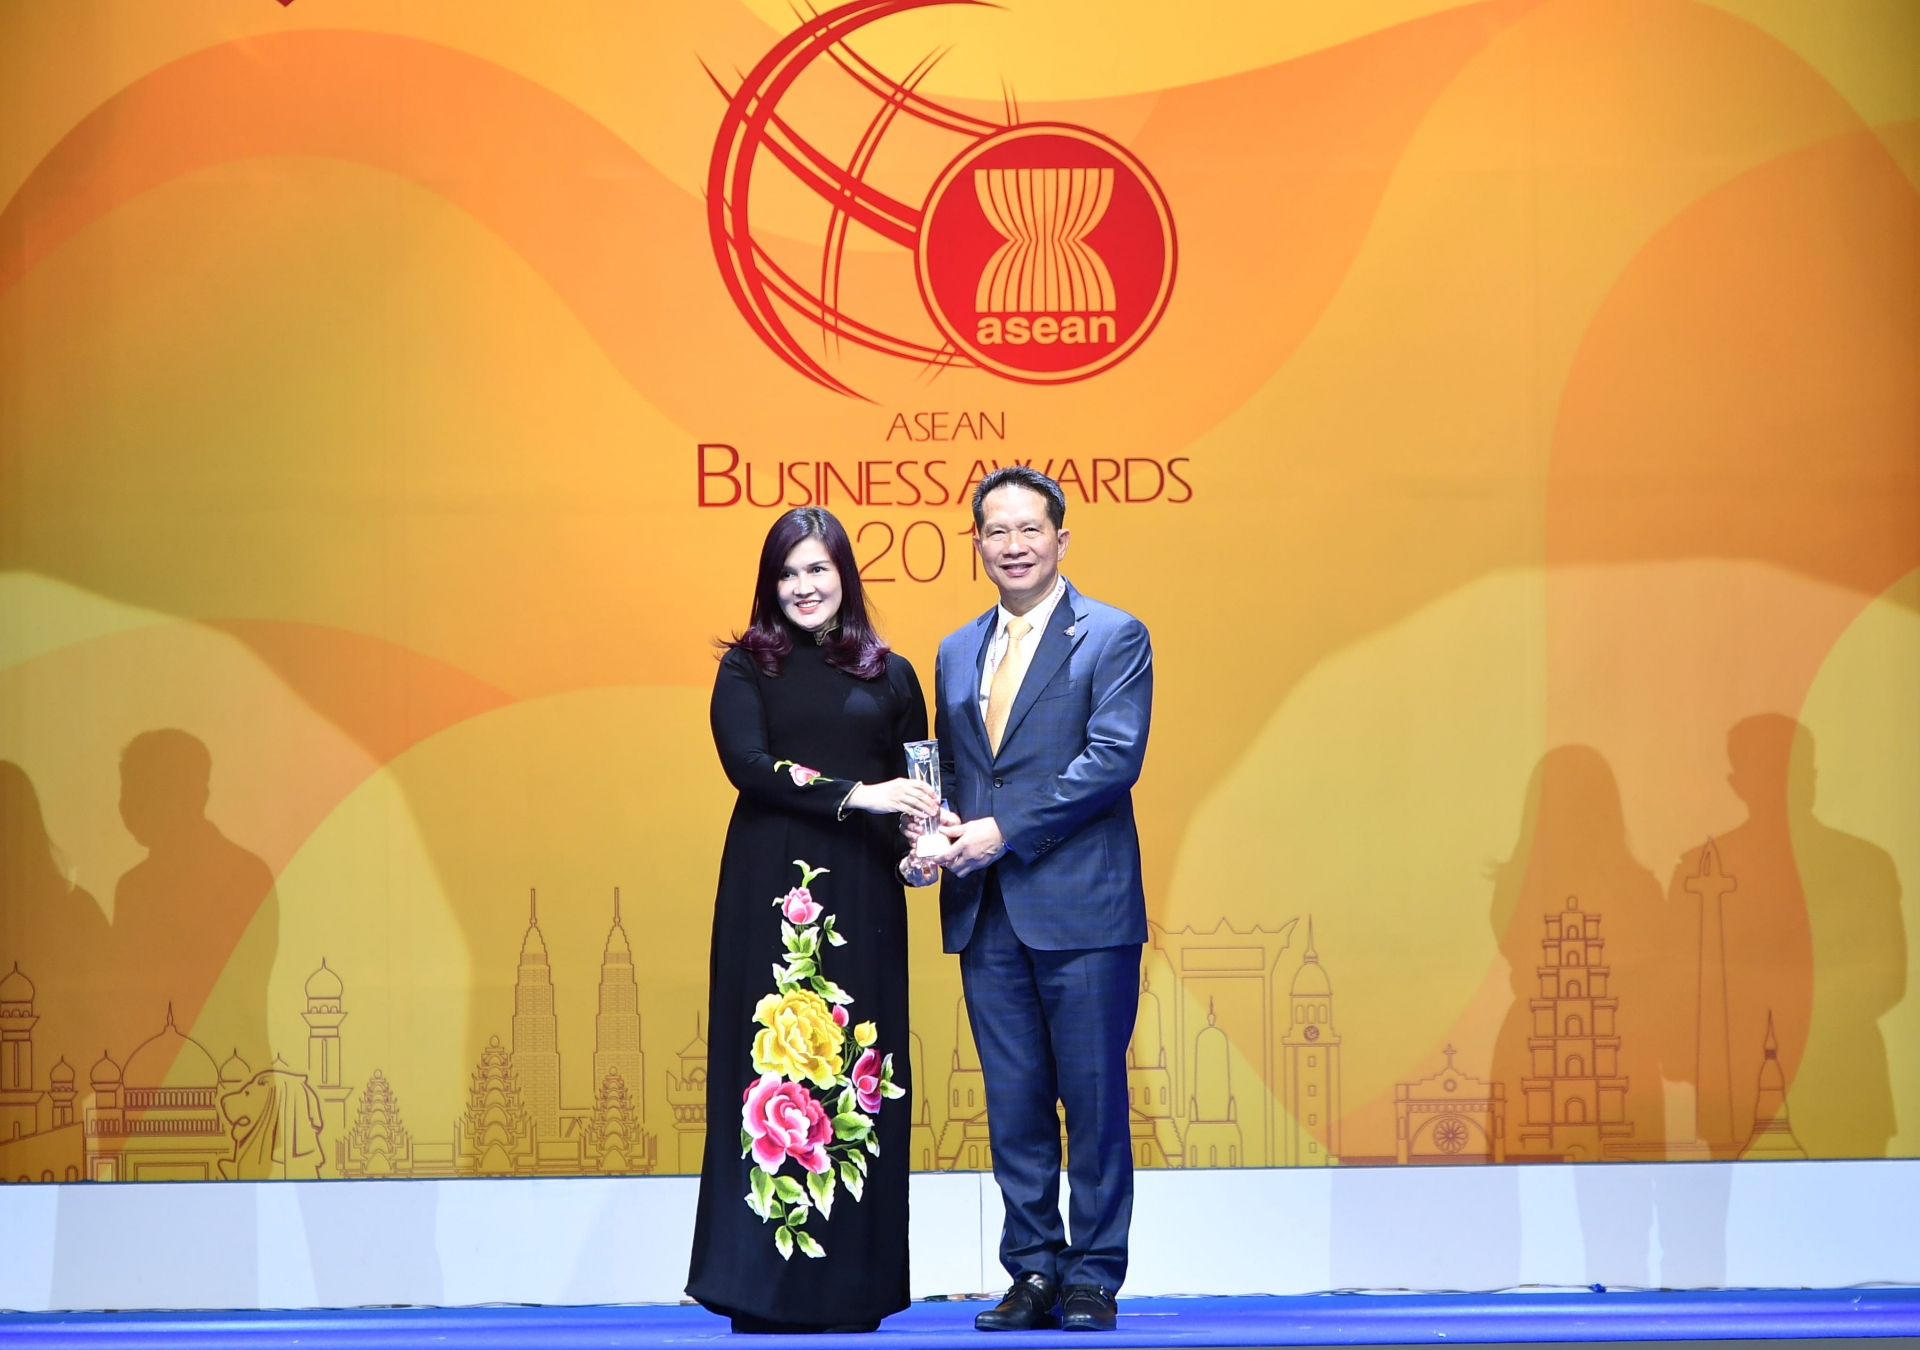 Vietjet named Best Aviation Enterprise 2019 at ASEAN Business Awards